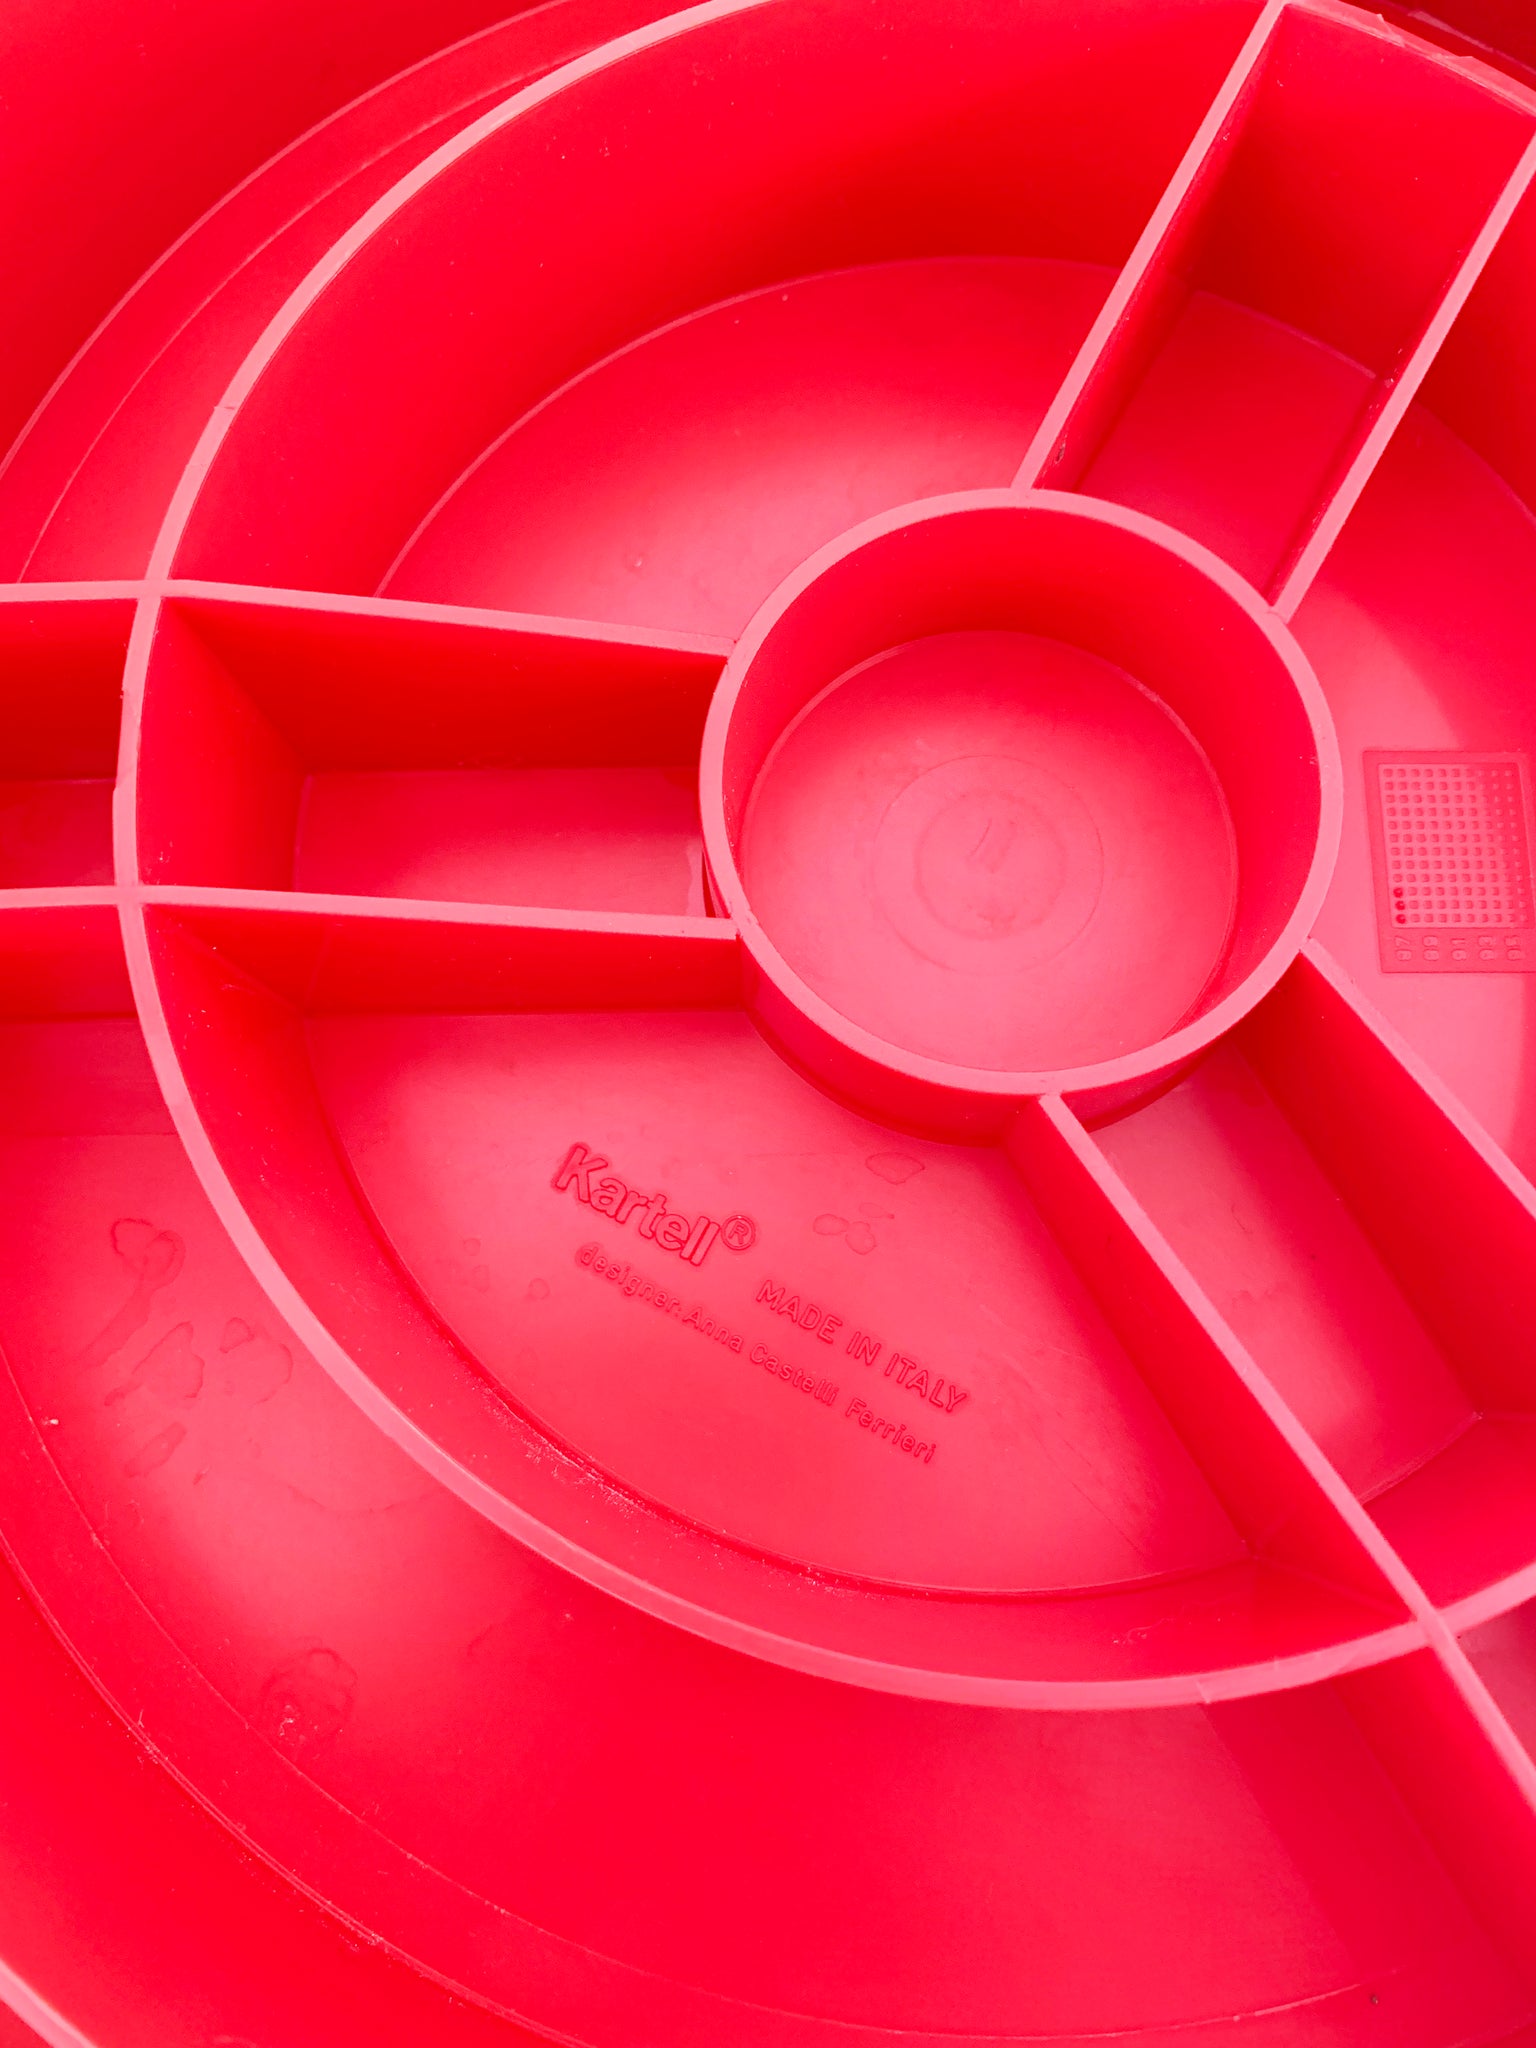 1987 Red Plastic Tavello Stool by Anna Castelli Ferrieri for Kartell